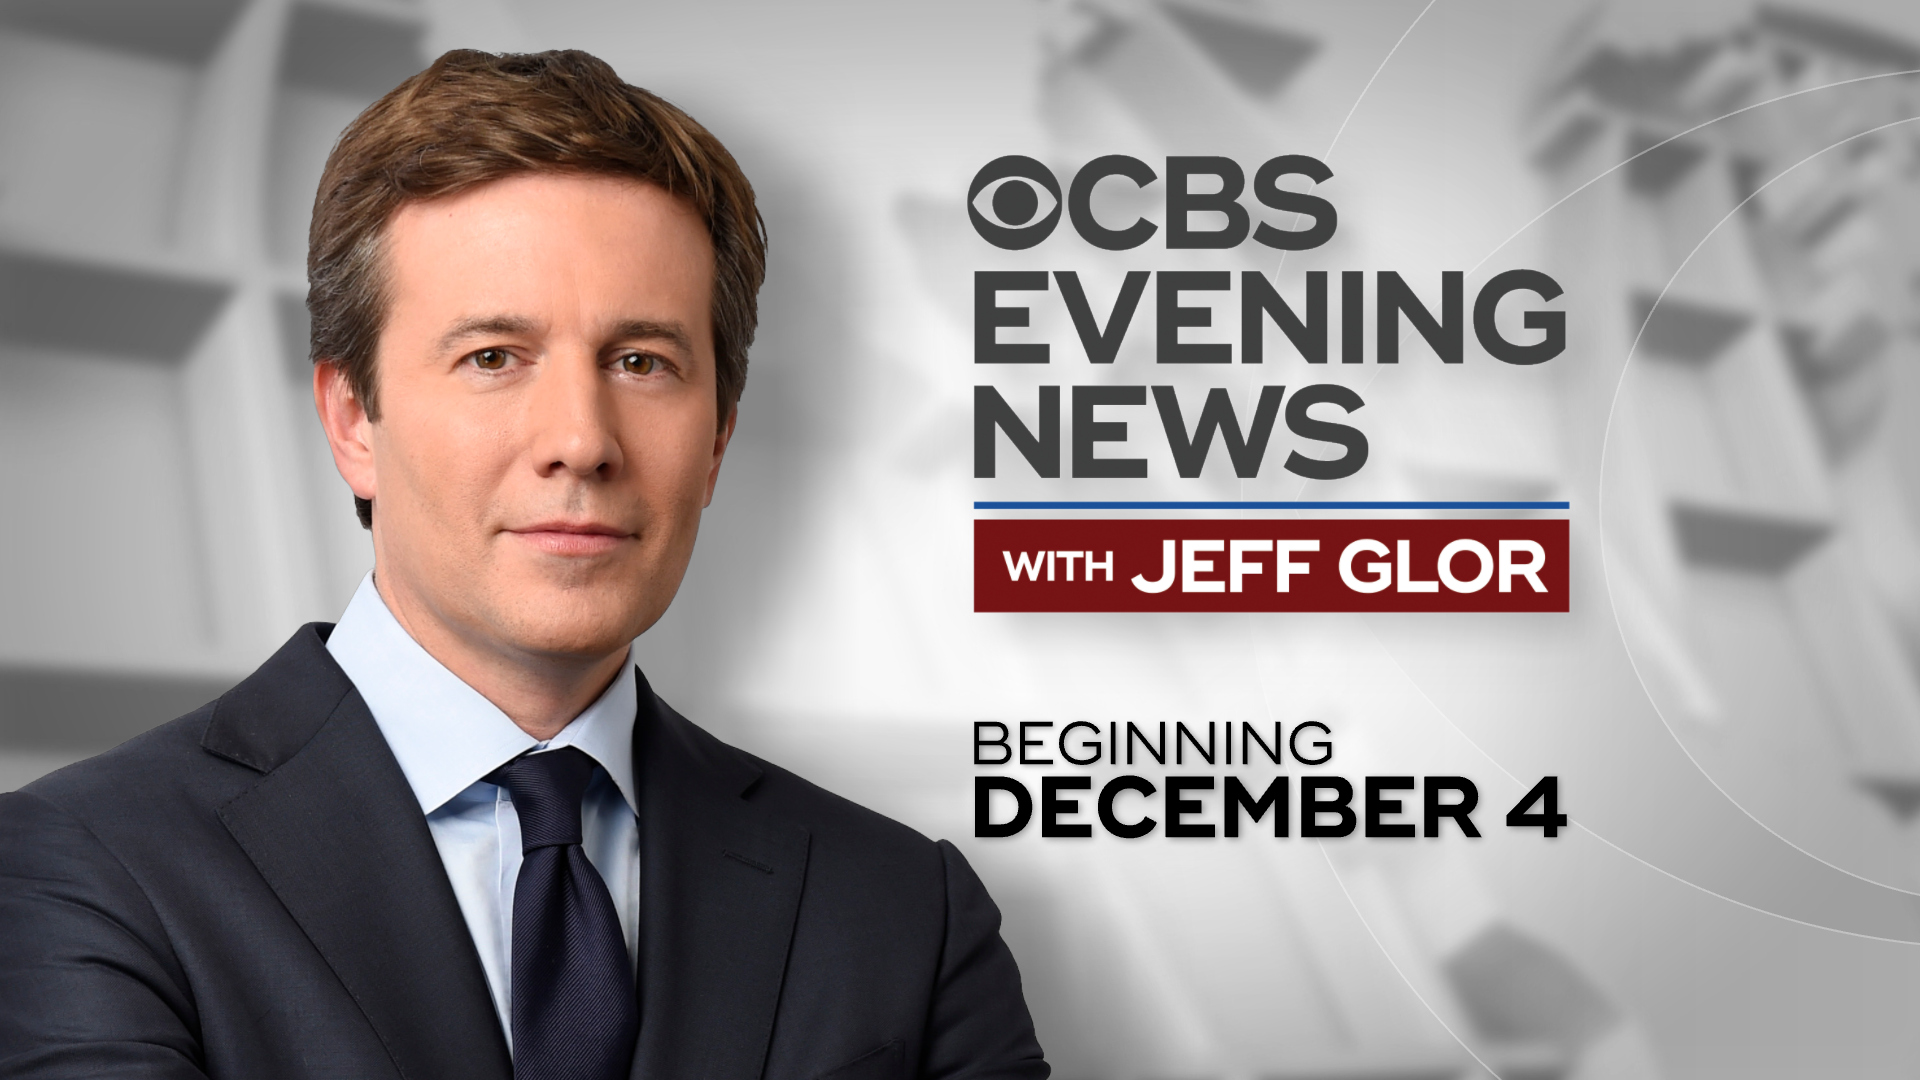 The Cbs Evening News With Jeff Glor Begins Dec